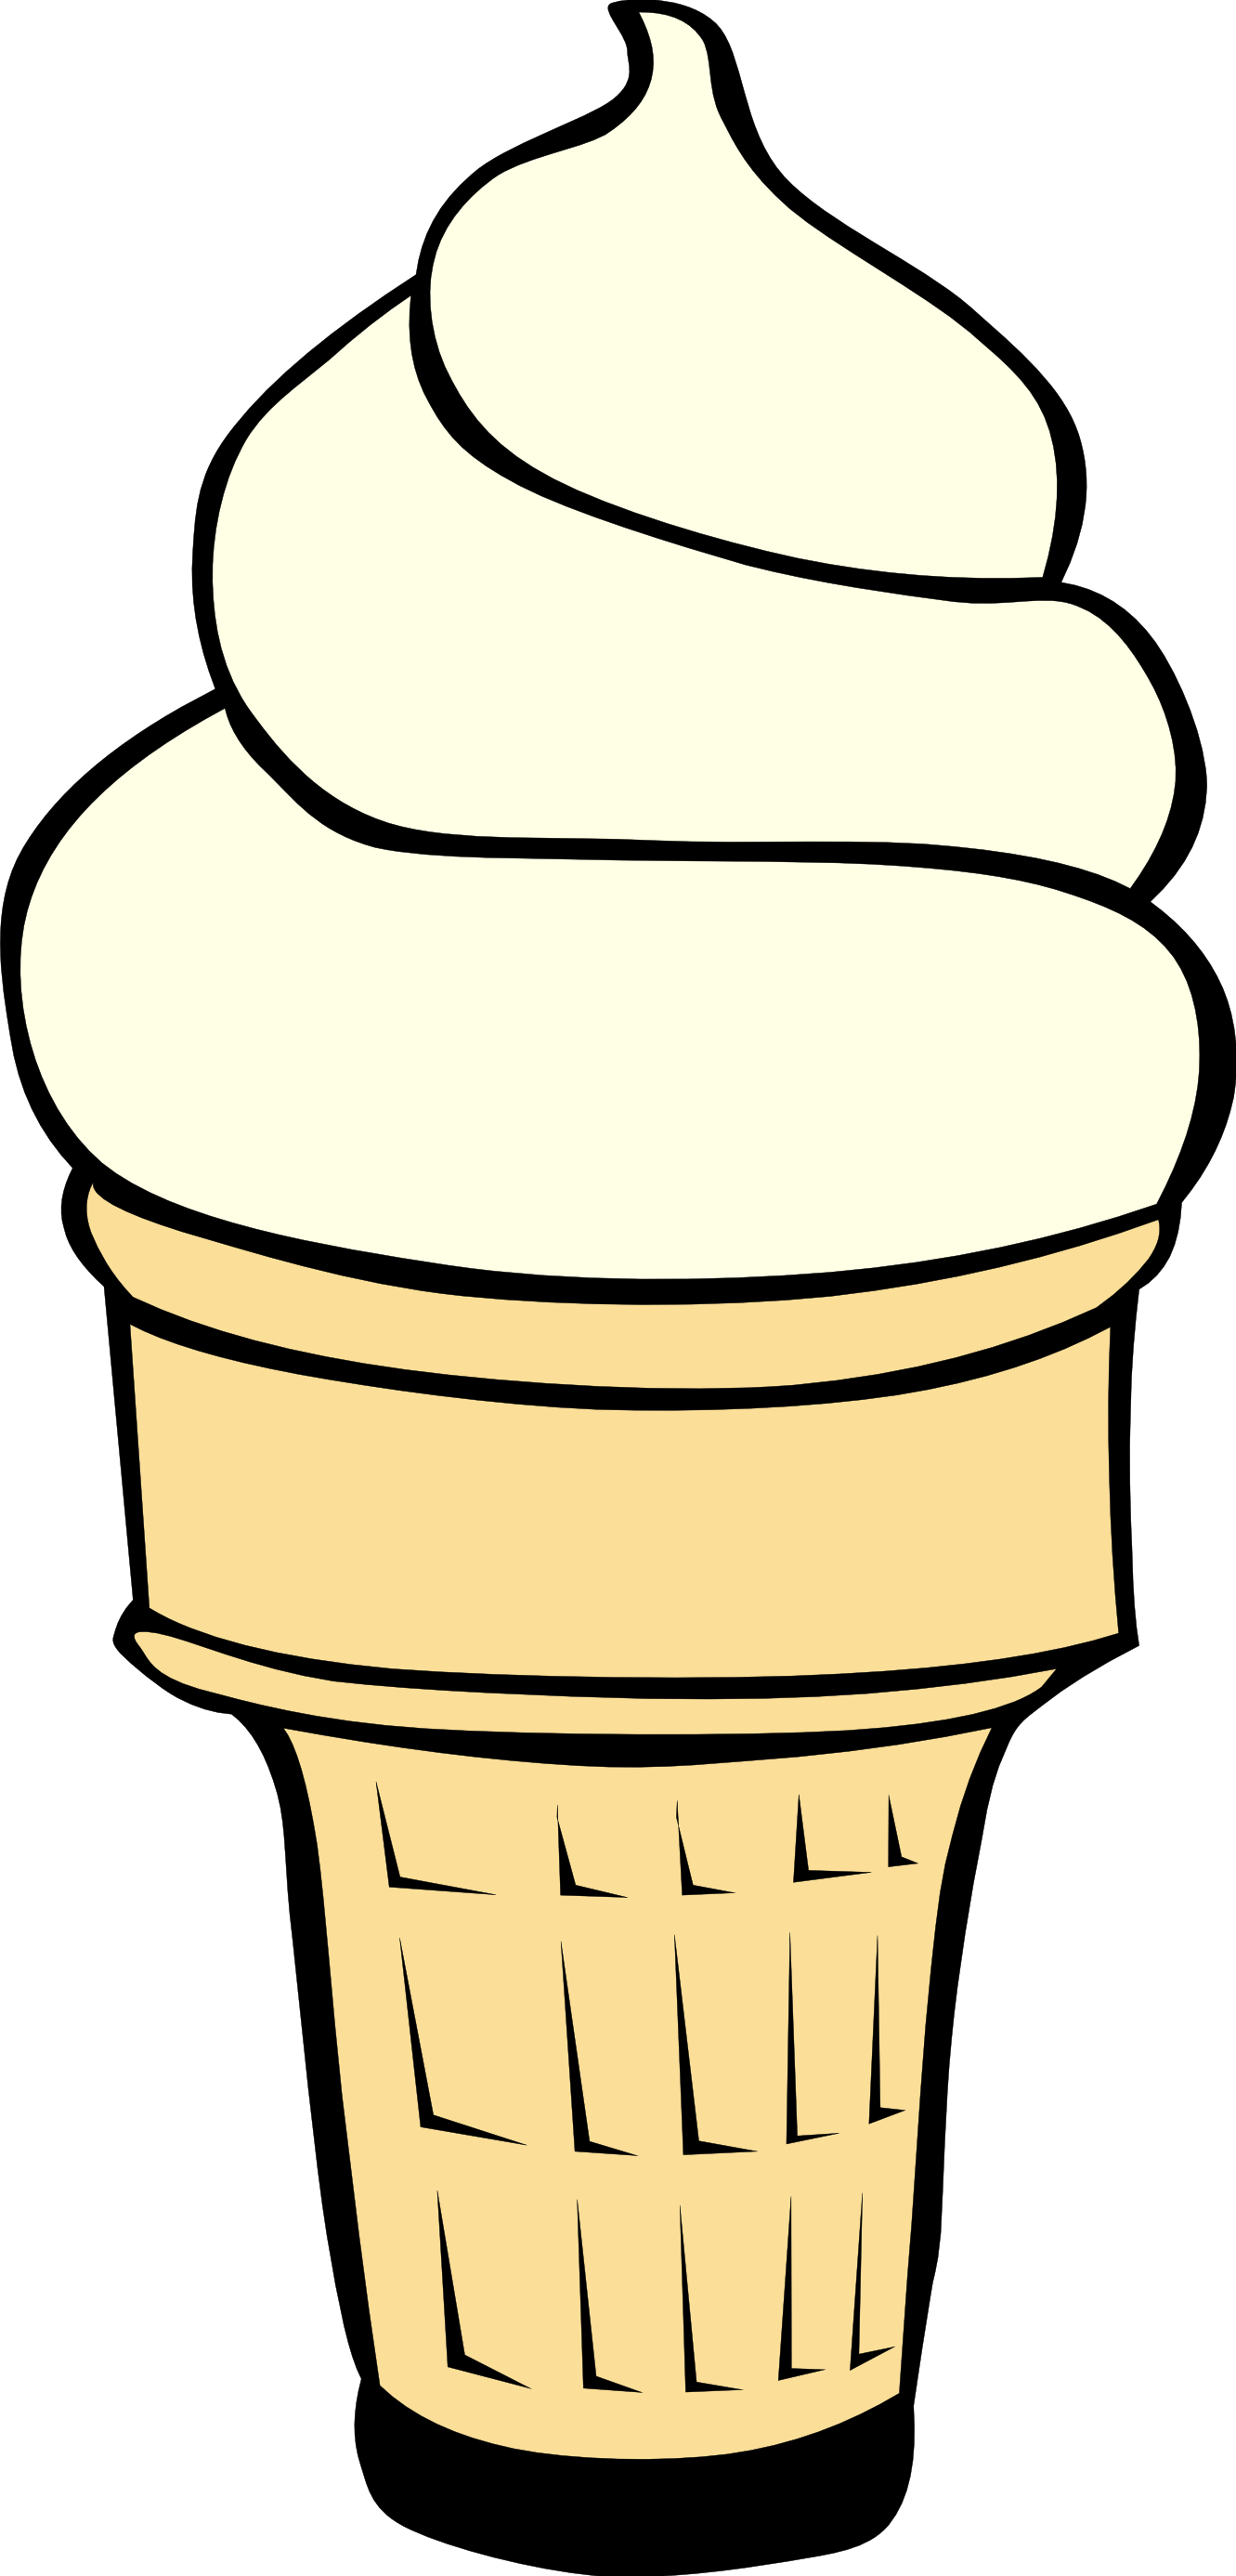 Ice cream cone ice creamne clipart clipart kid 2